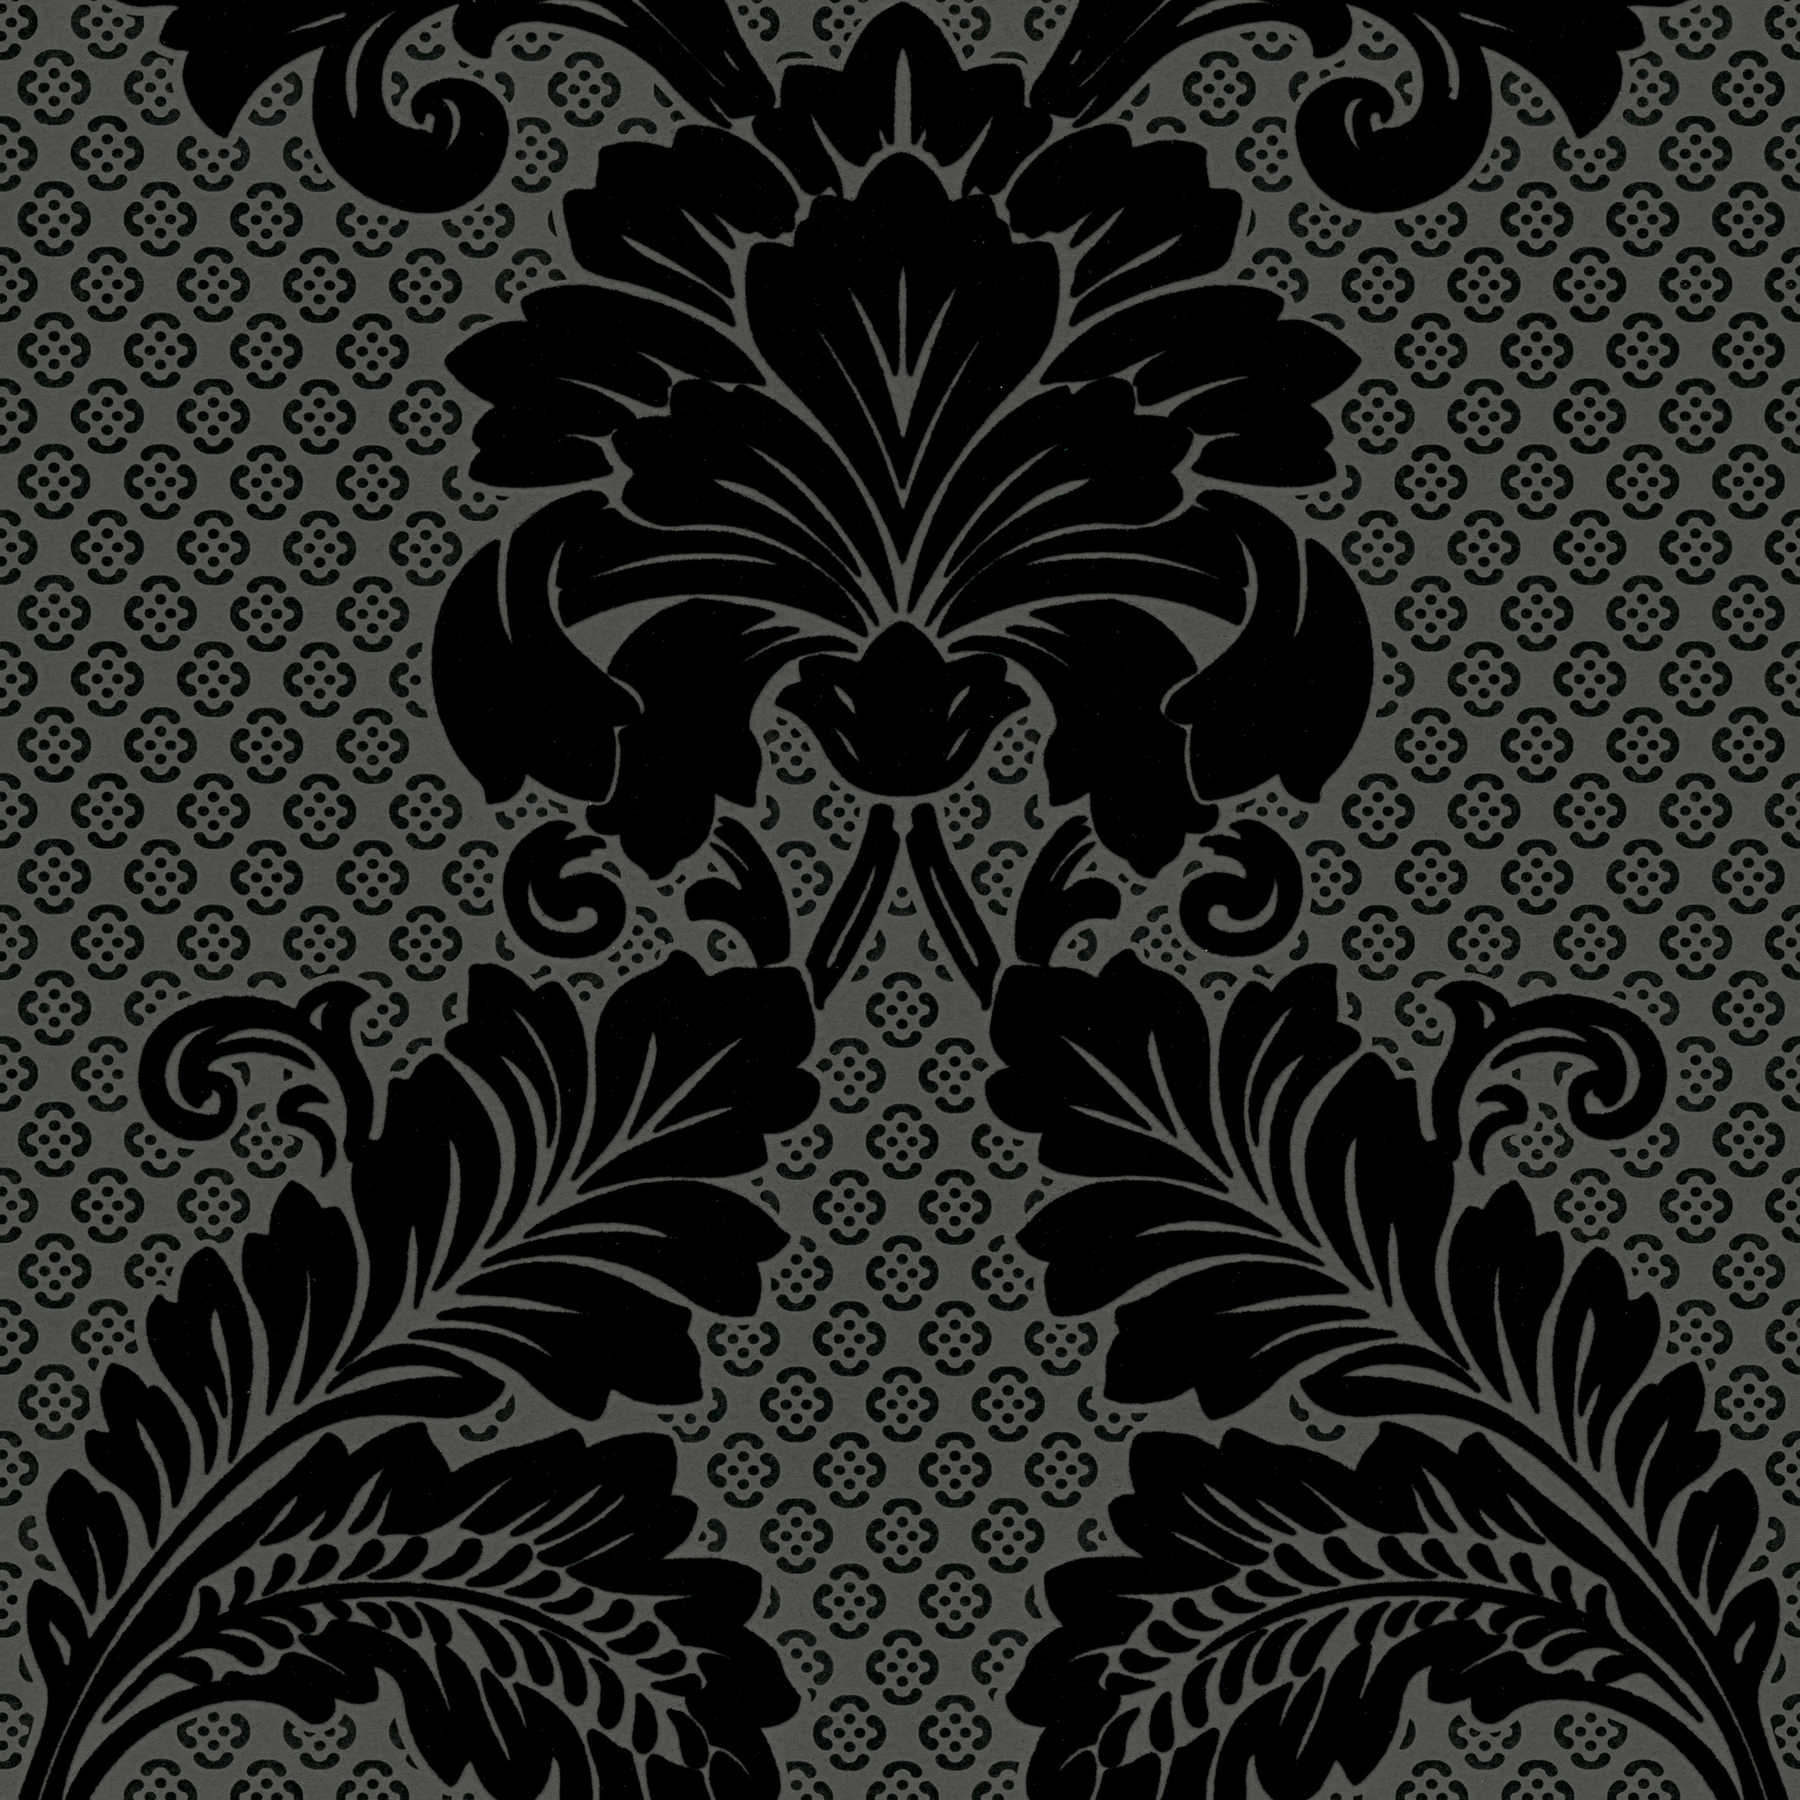         Patterned ornamental wallpaper with large floral motif - black, grey
    